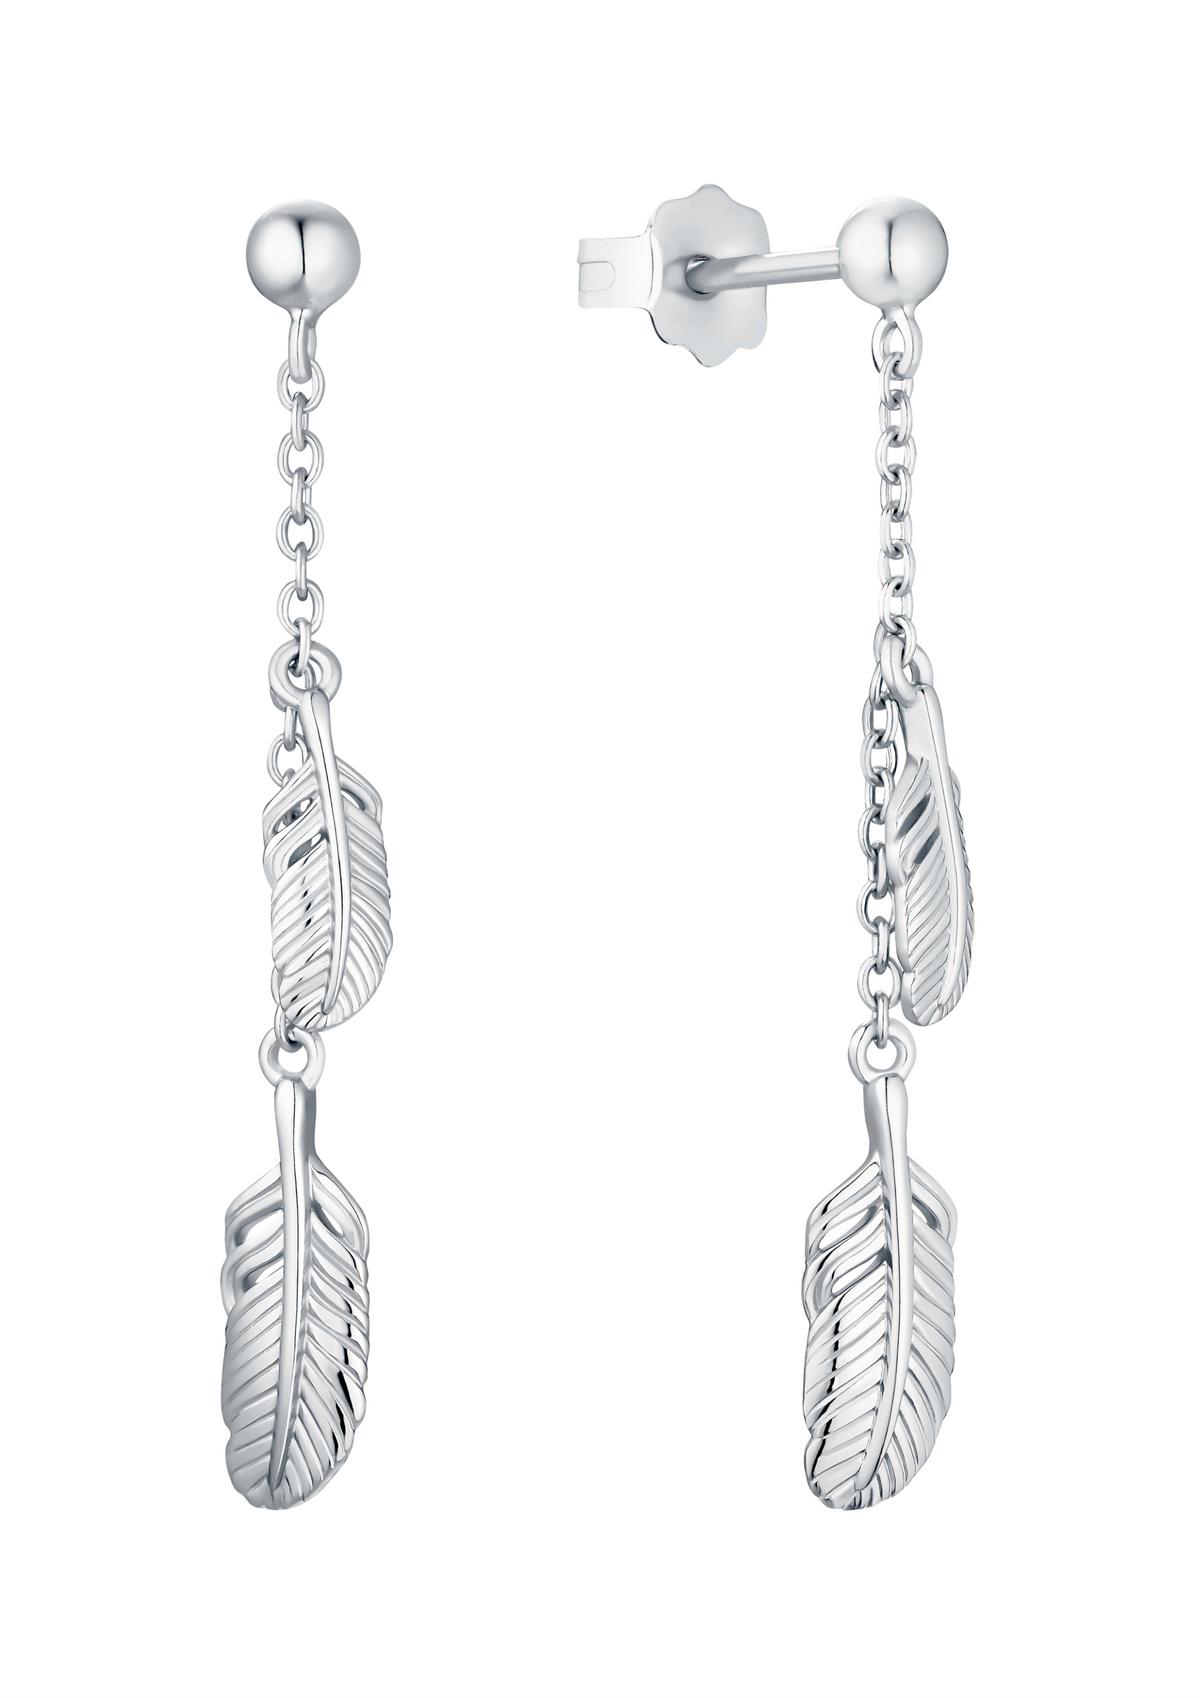 Feder-Ohrringe aus Silber 925 - silber | Ohrhänger